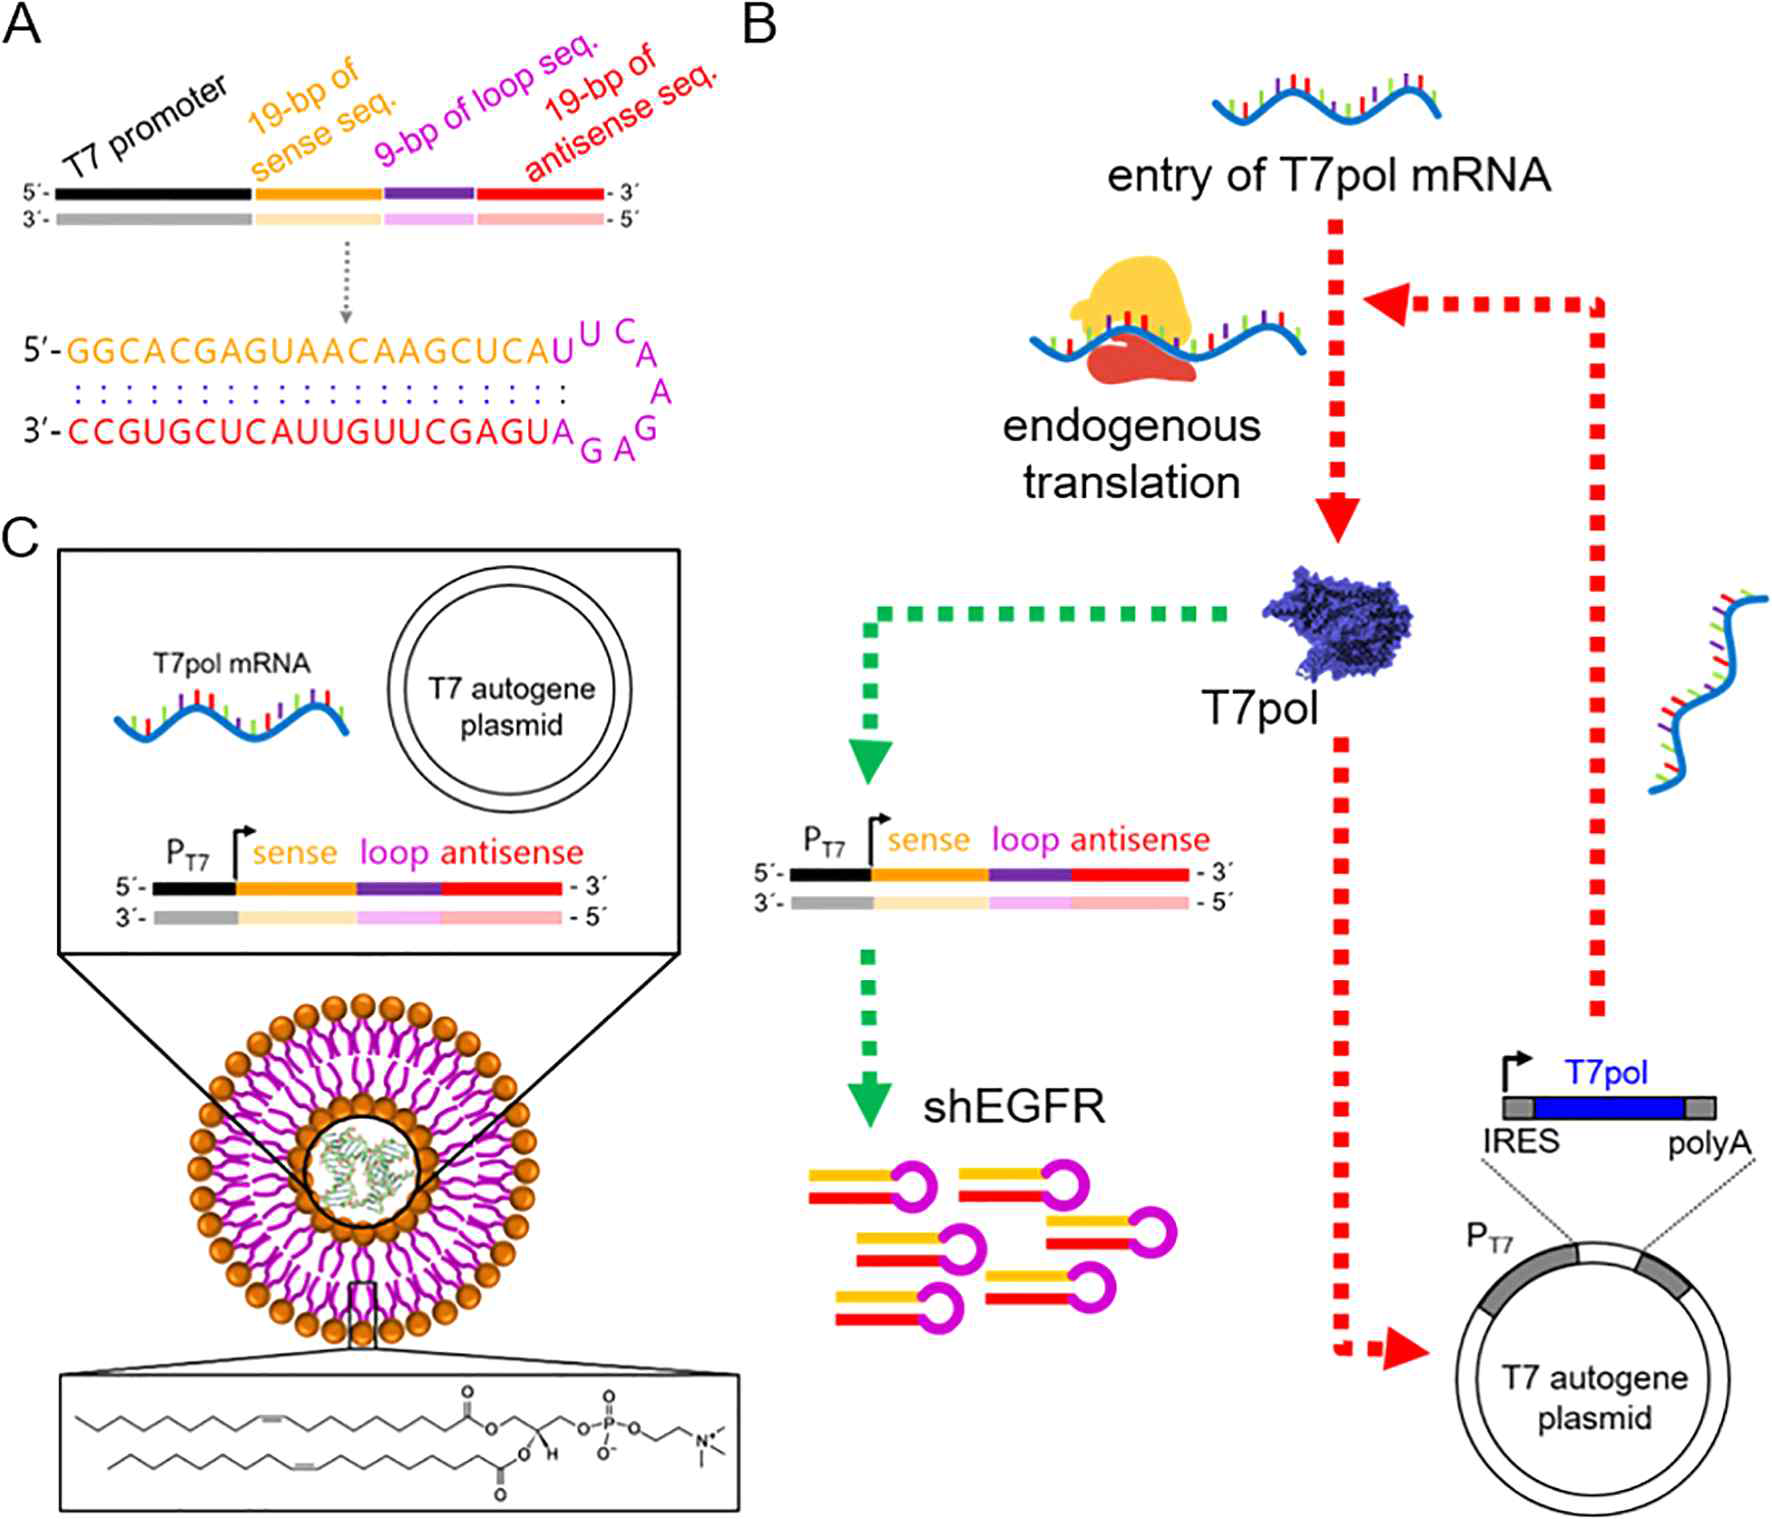 A. pT7/shEGFR DNA template 모식도, 전사된 shEGFR의 2차원적 구조 및 서열. B. EGFR 사일런싱이 가능한 automatic shRNA 증폭 시스템(ARA) 작동 모식도. C. DOPC 리포좀 전달체 모식도